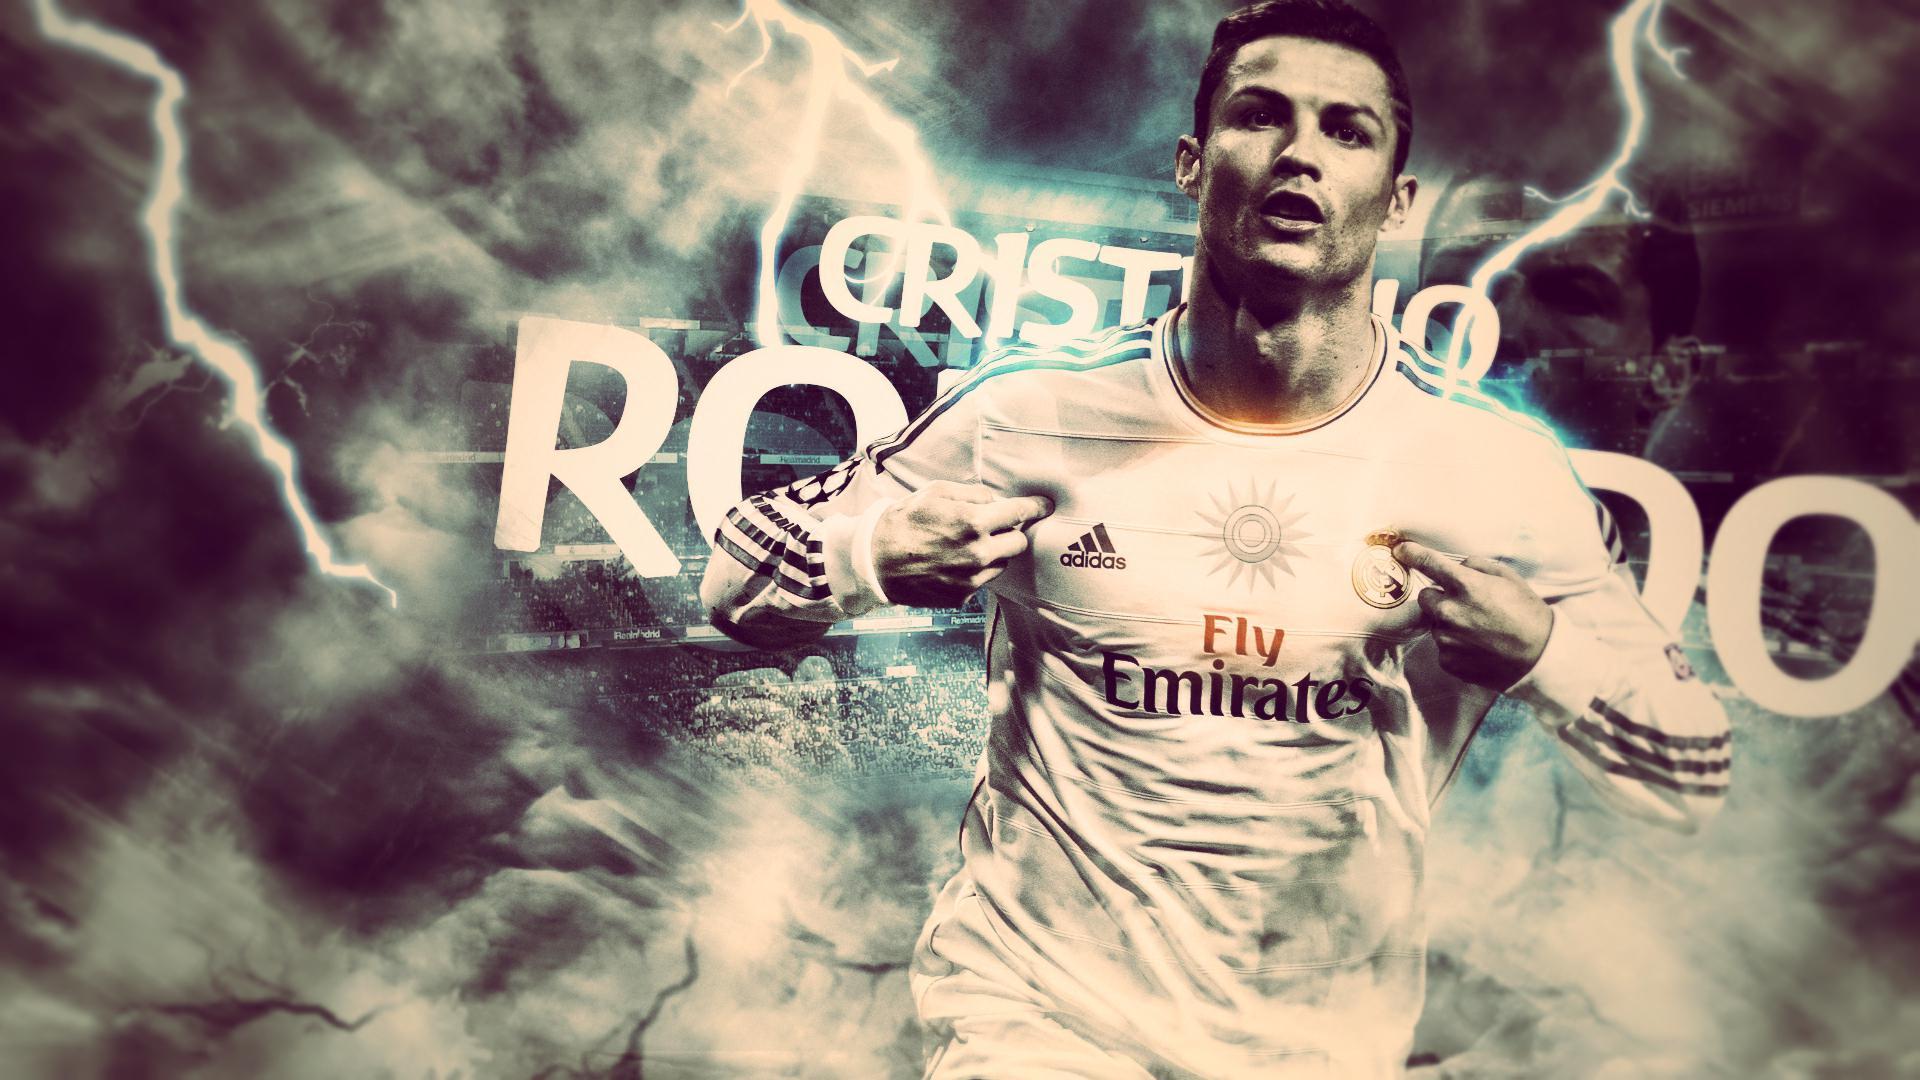 HD 2014 Cristiano Ronaldo Desktop Background Wallpaper